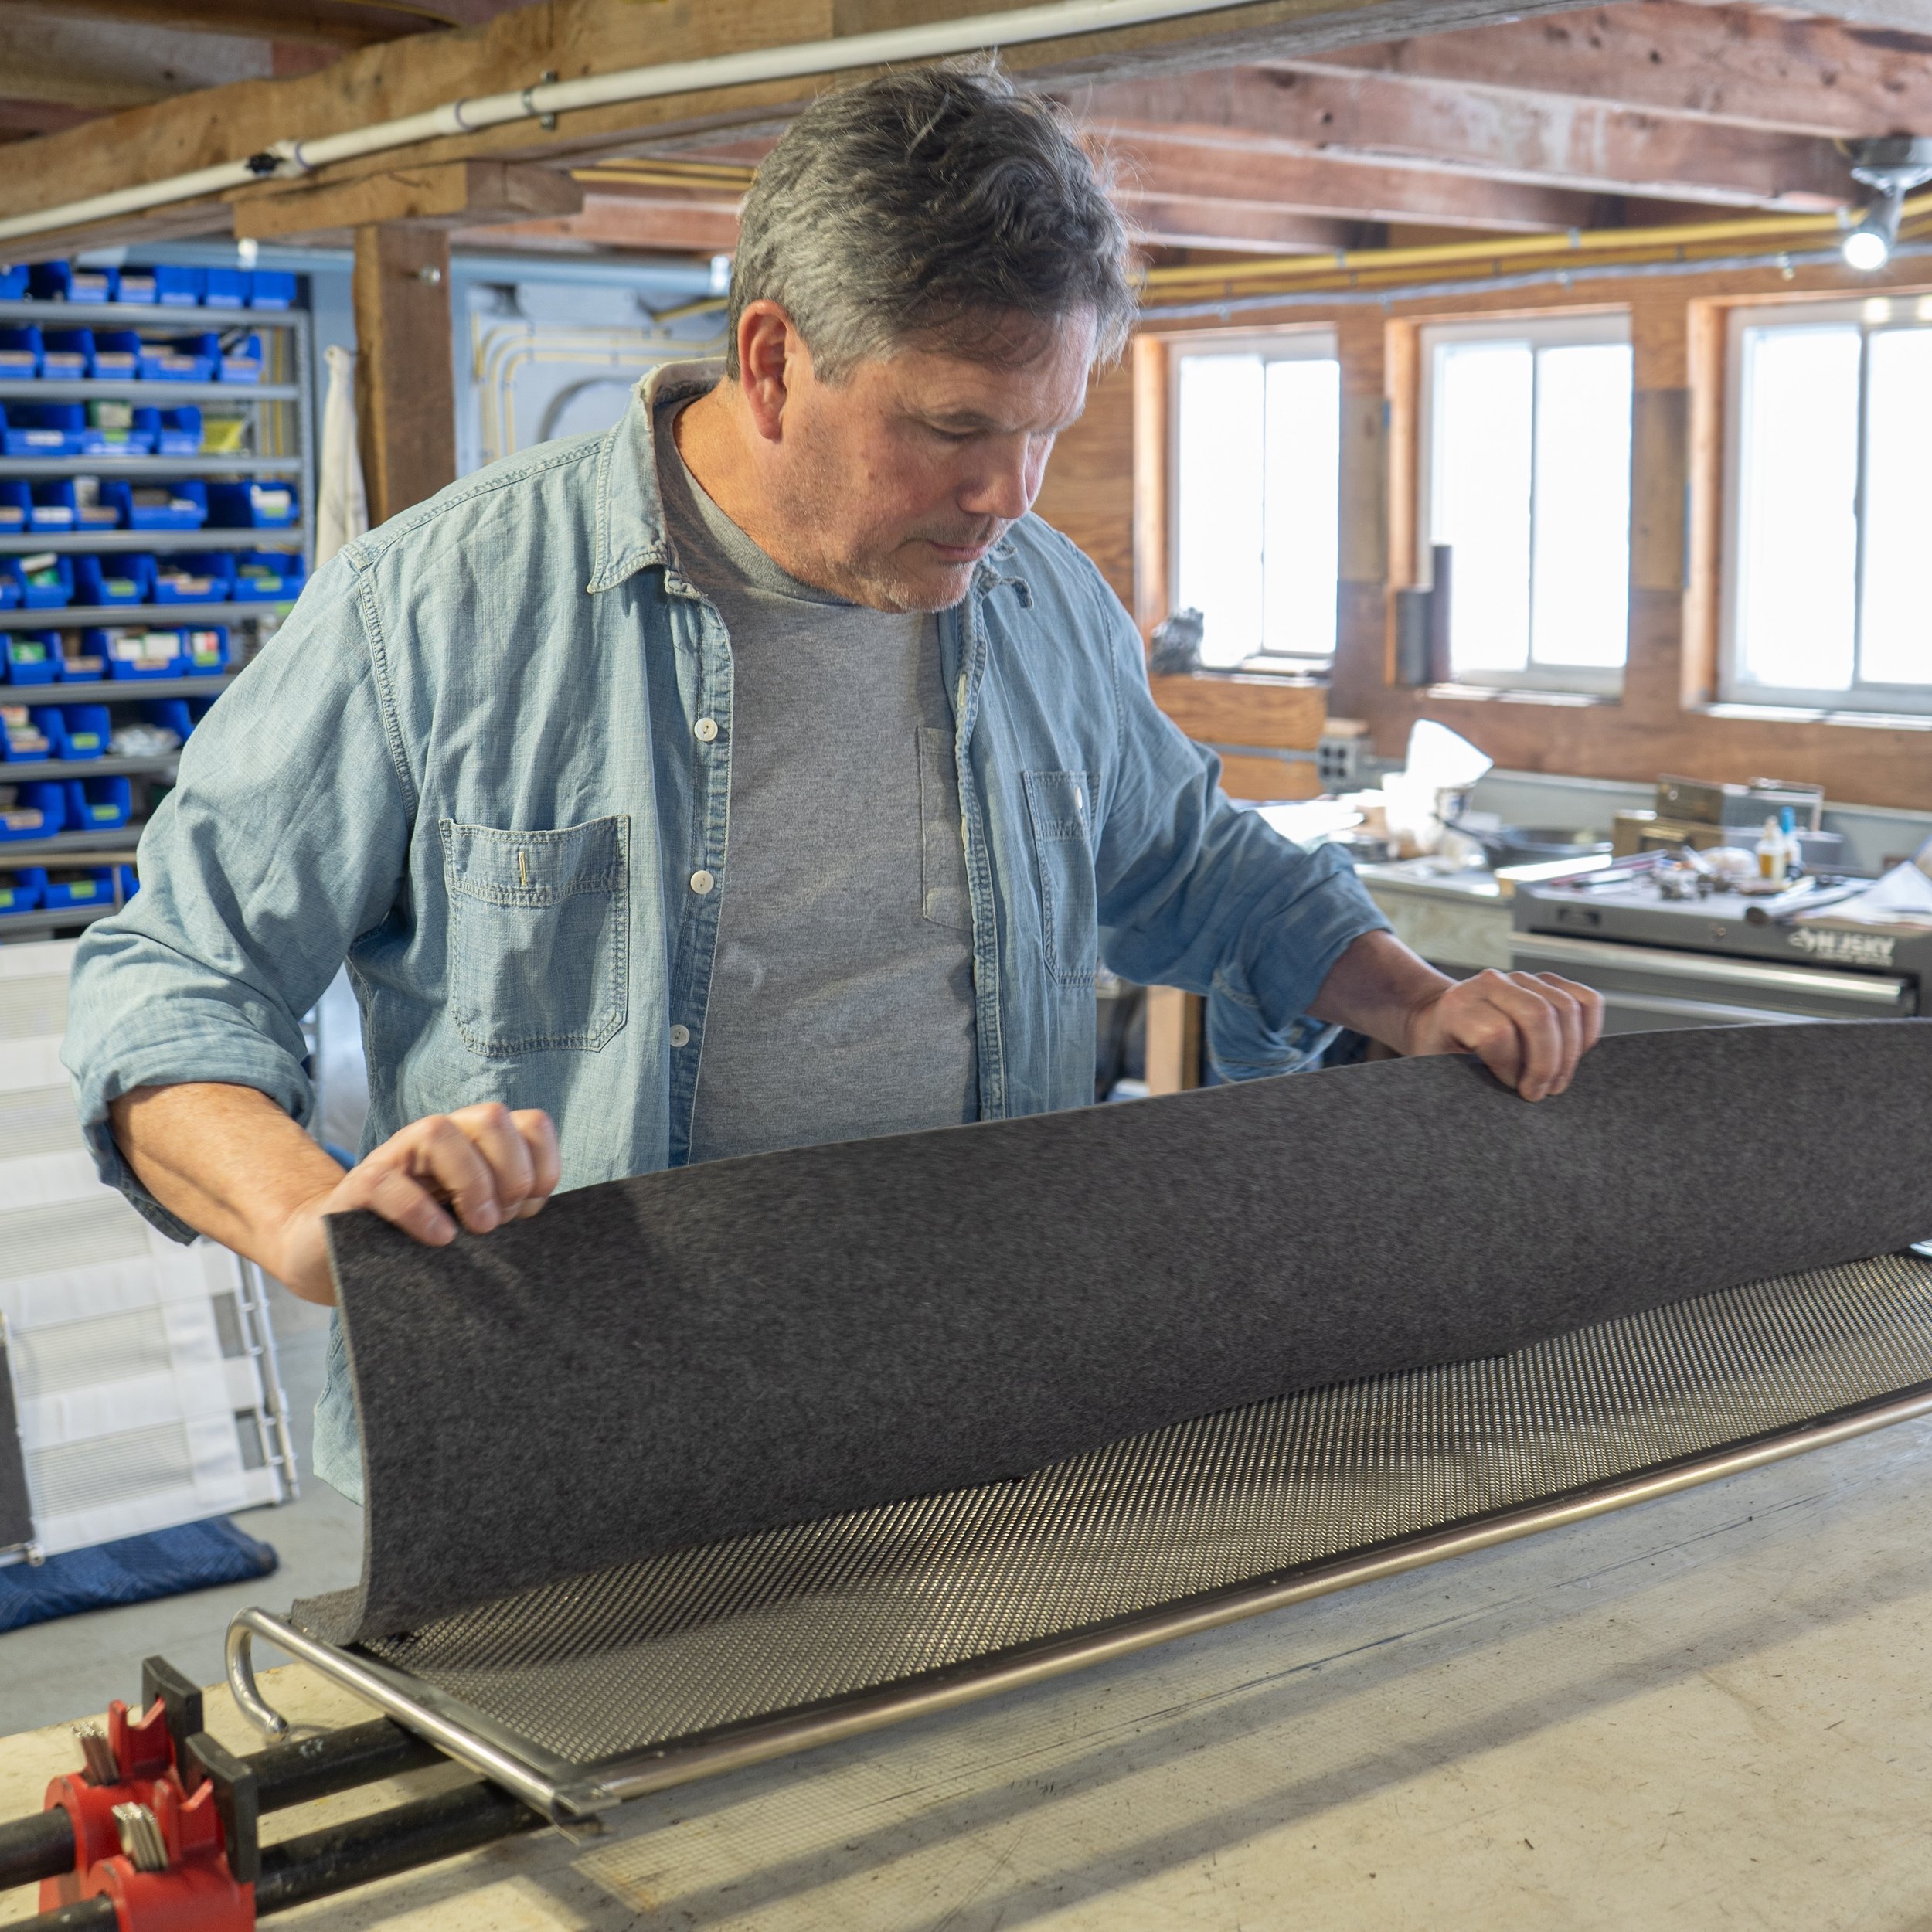 Jim puts the finishing touches on a felt headboard for a Hammock order.

#jimzivic #jimzivicdesign #hammock #industrialdesigner #furnituredesign # #highenddesign